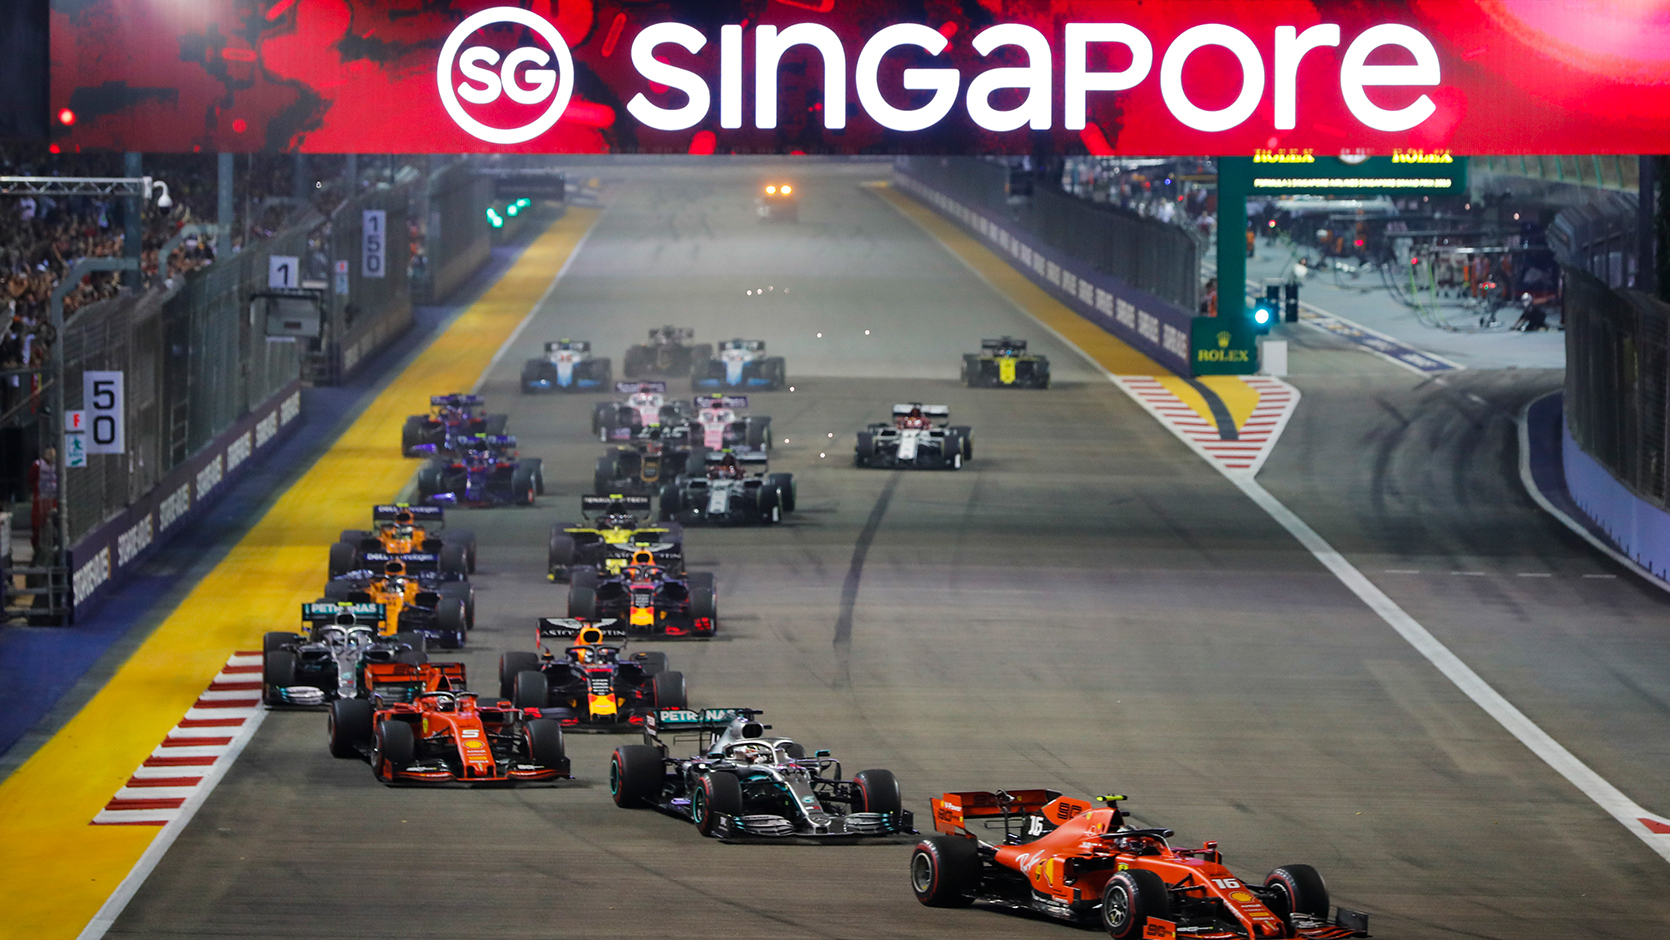 Singapore Grand Prix (Photo: Visit Singapore)